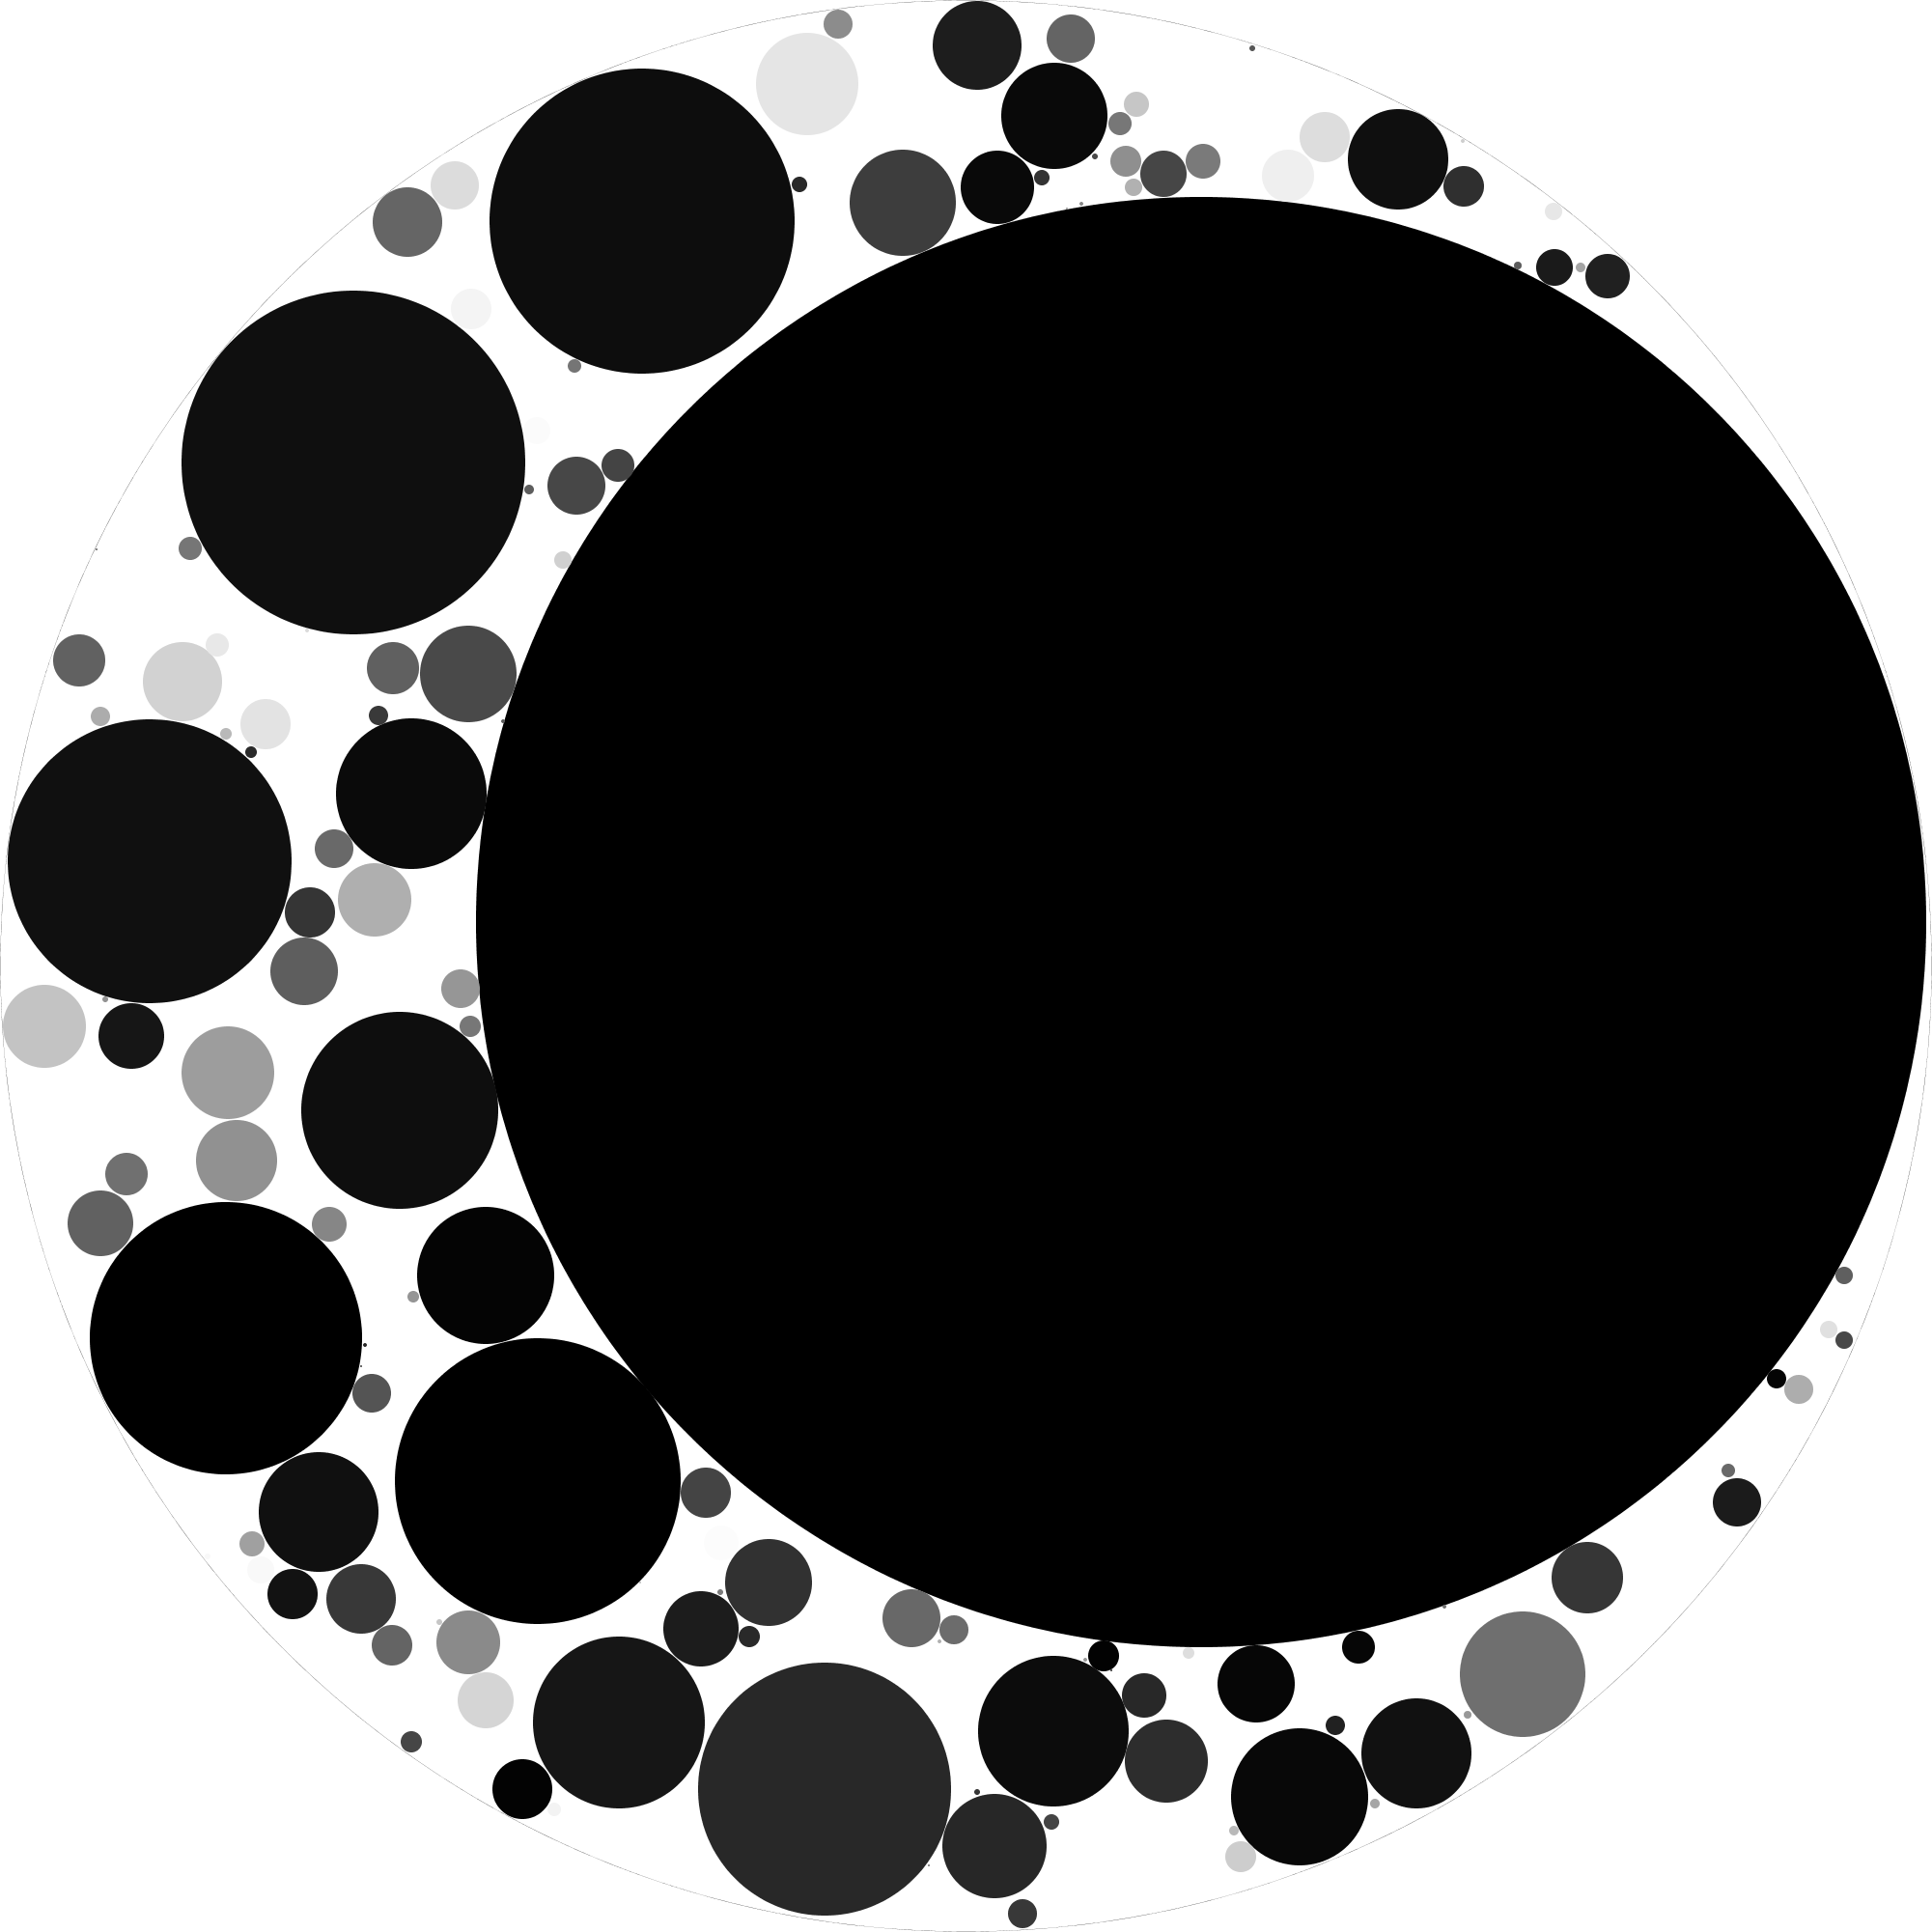 A collection of colliding circles.